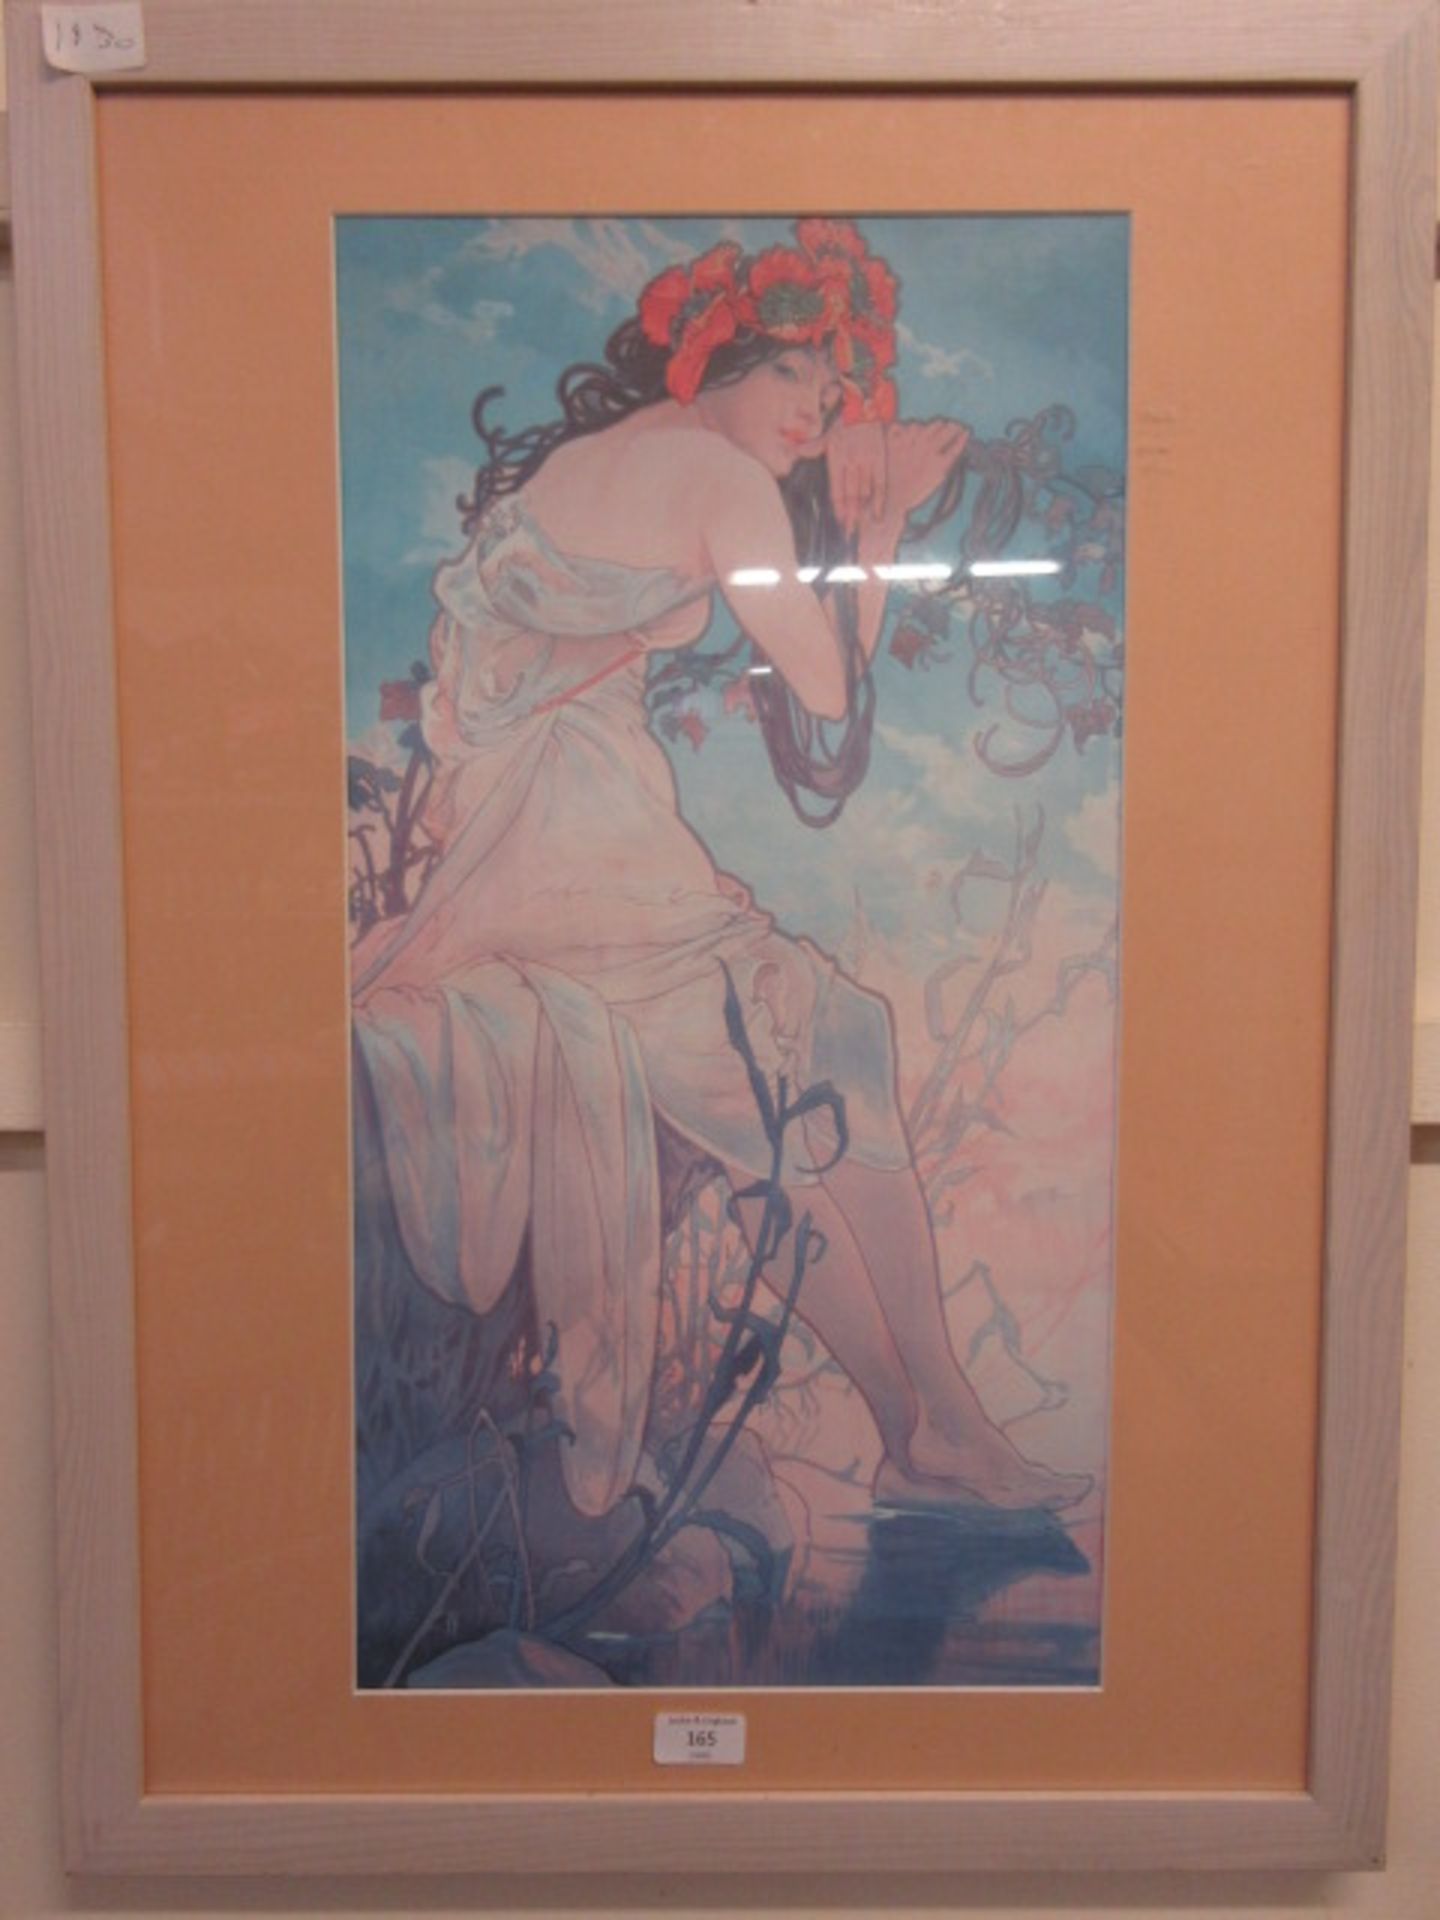 A framed print of a lady